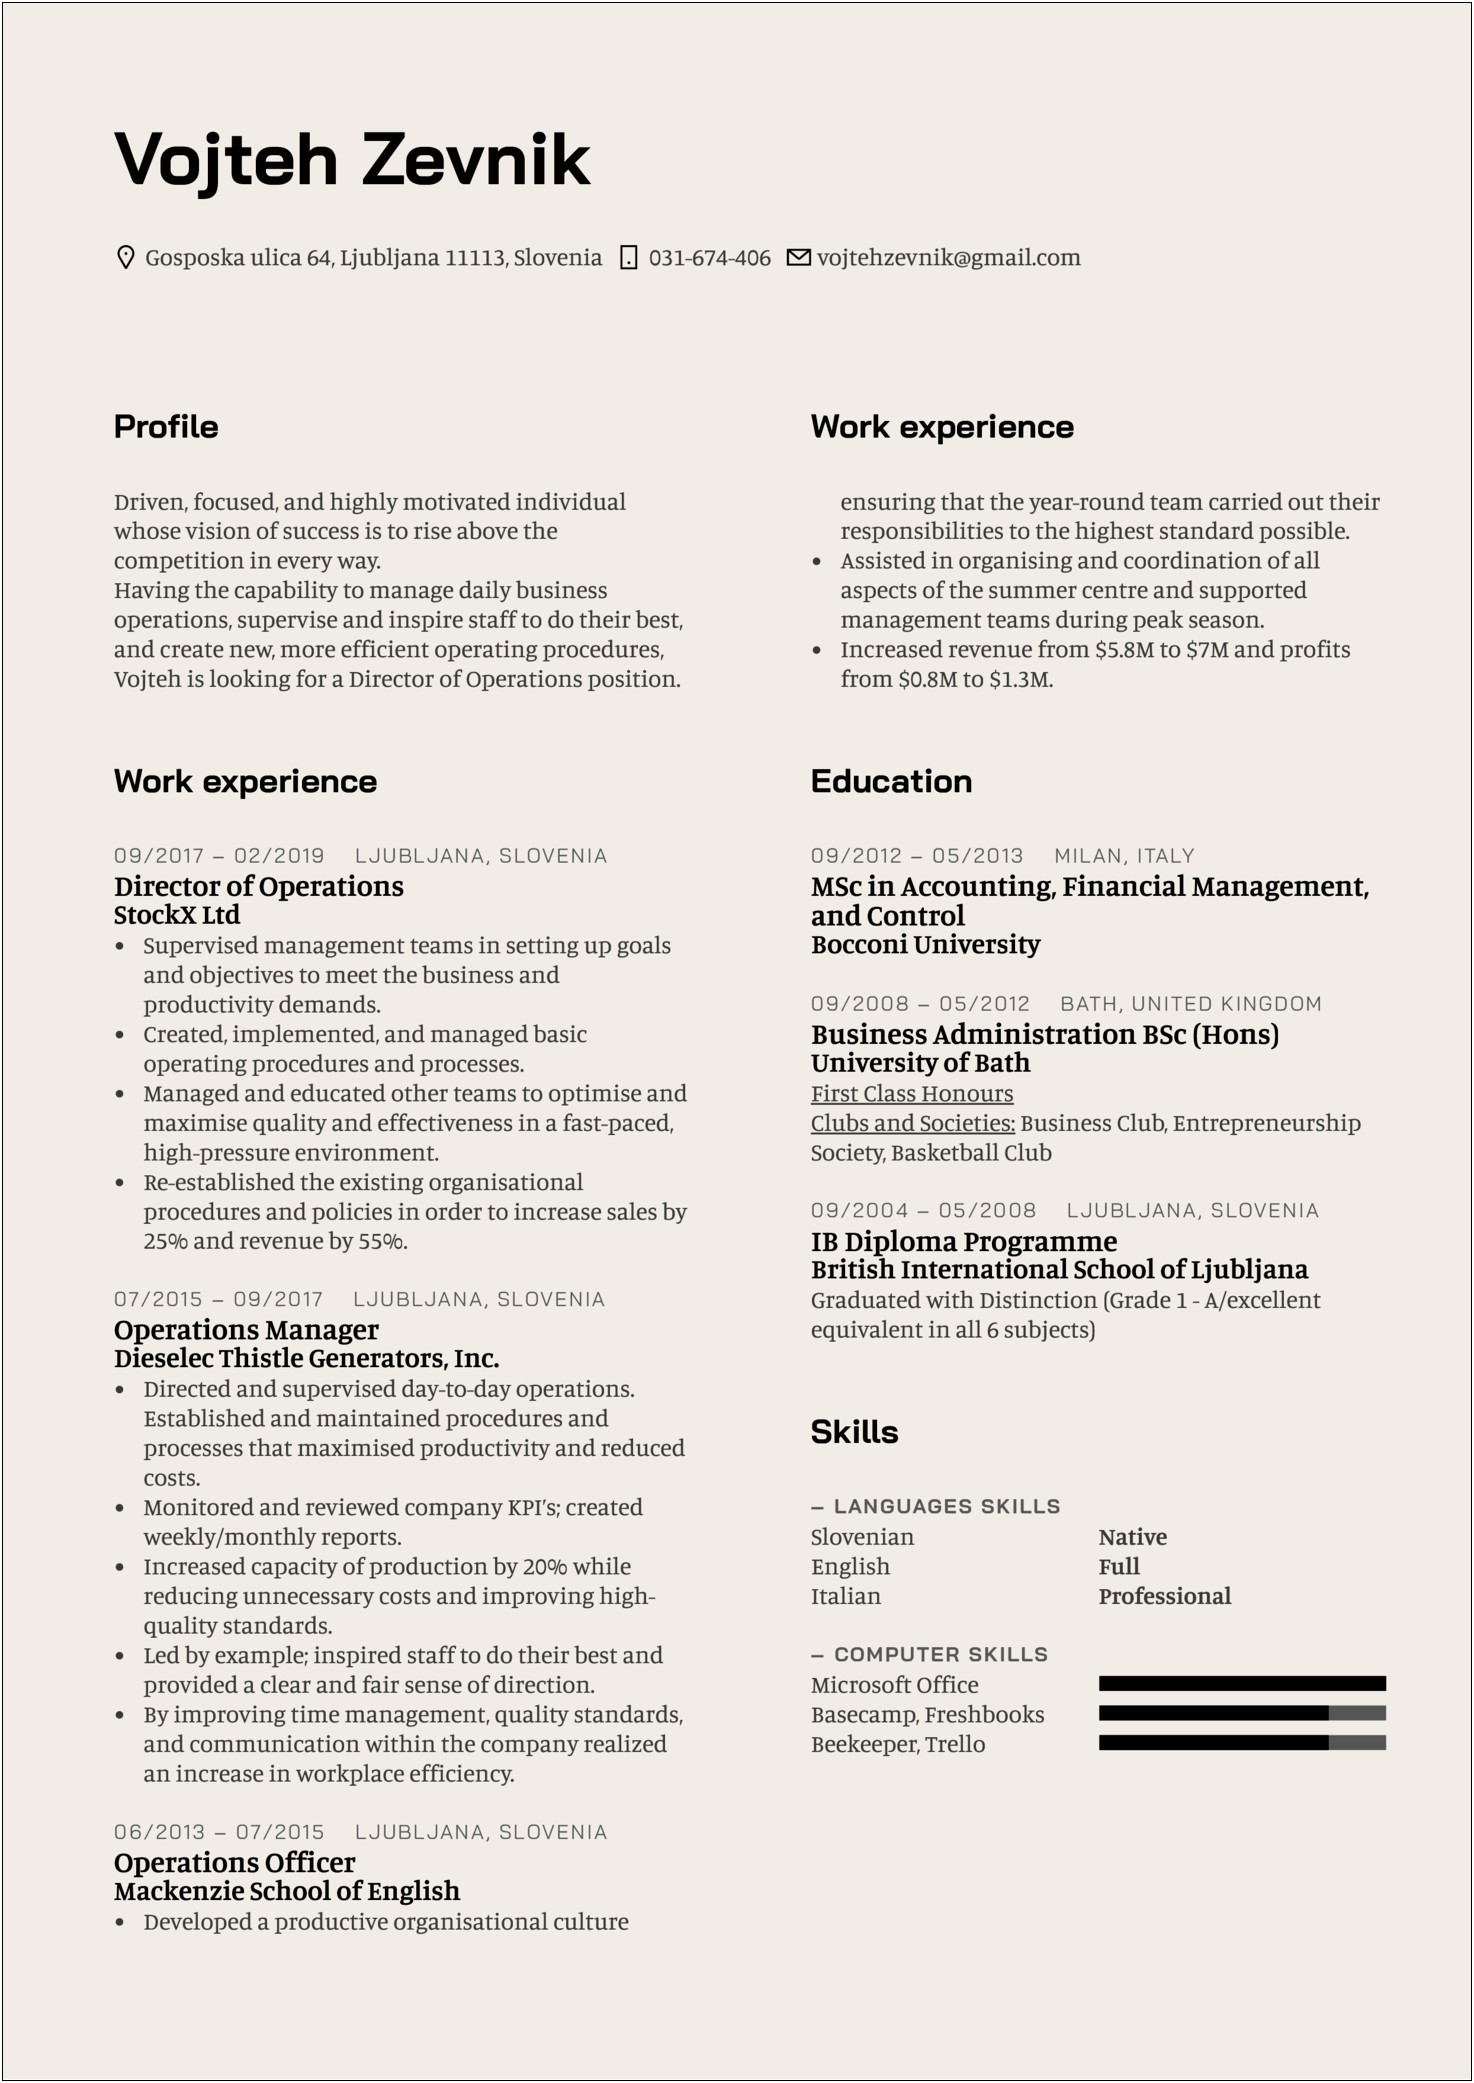 Sample Resume Of Corporate Director Of Revenue Management